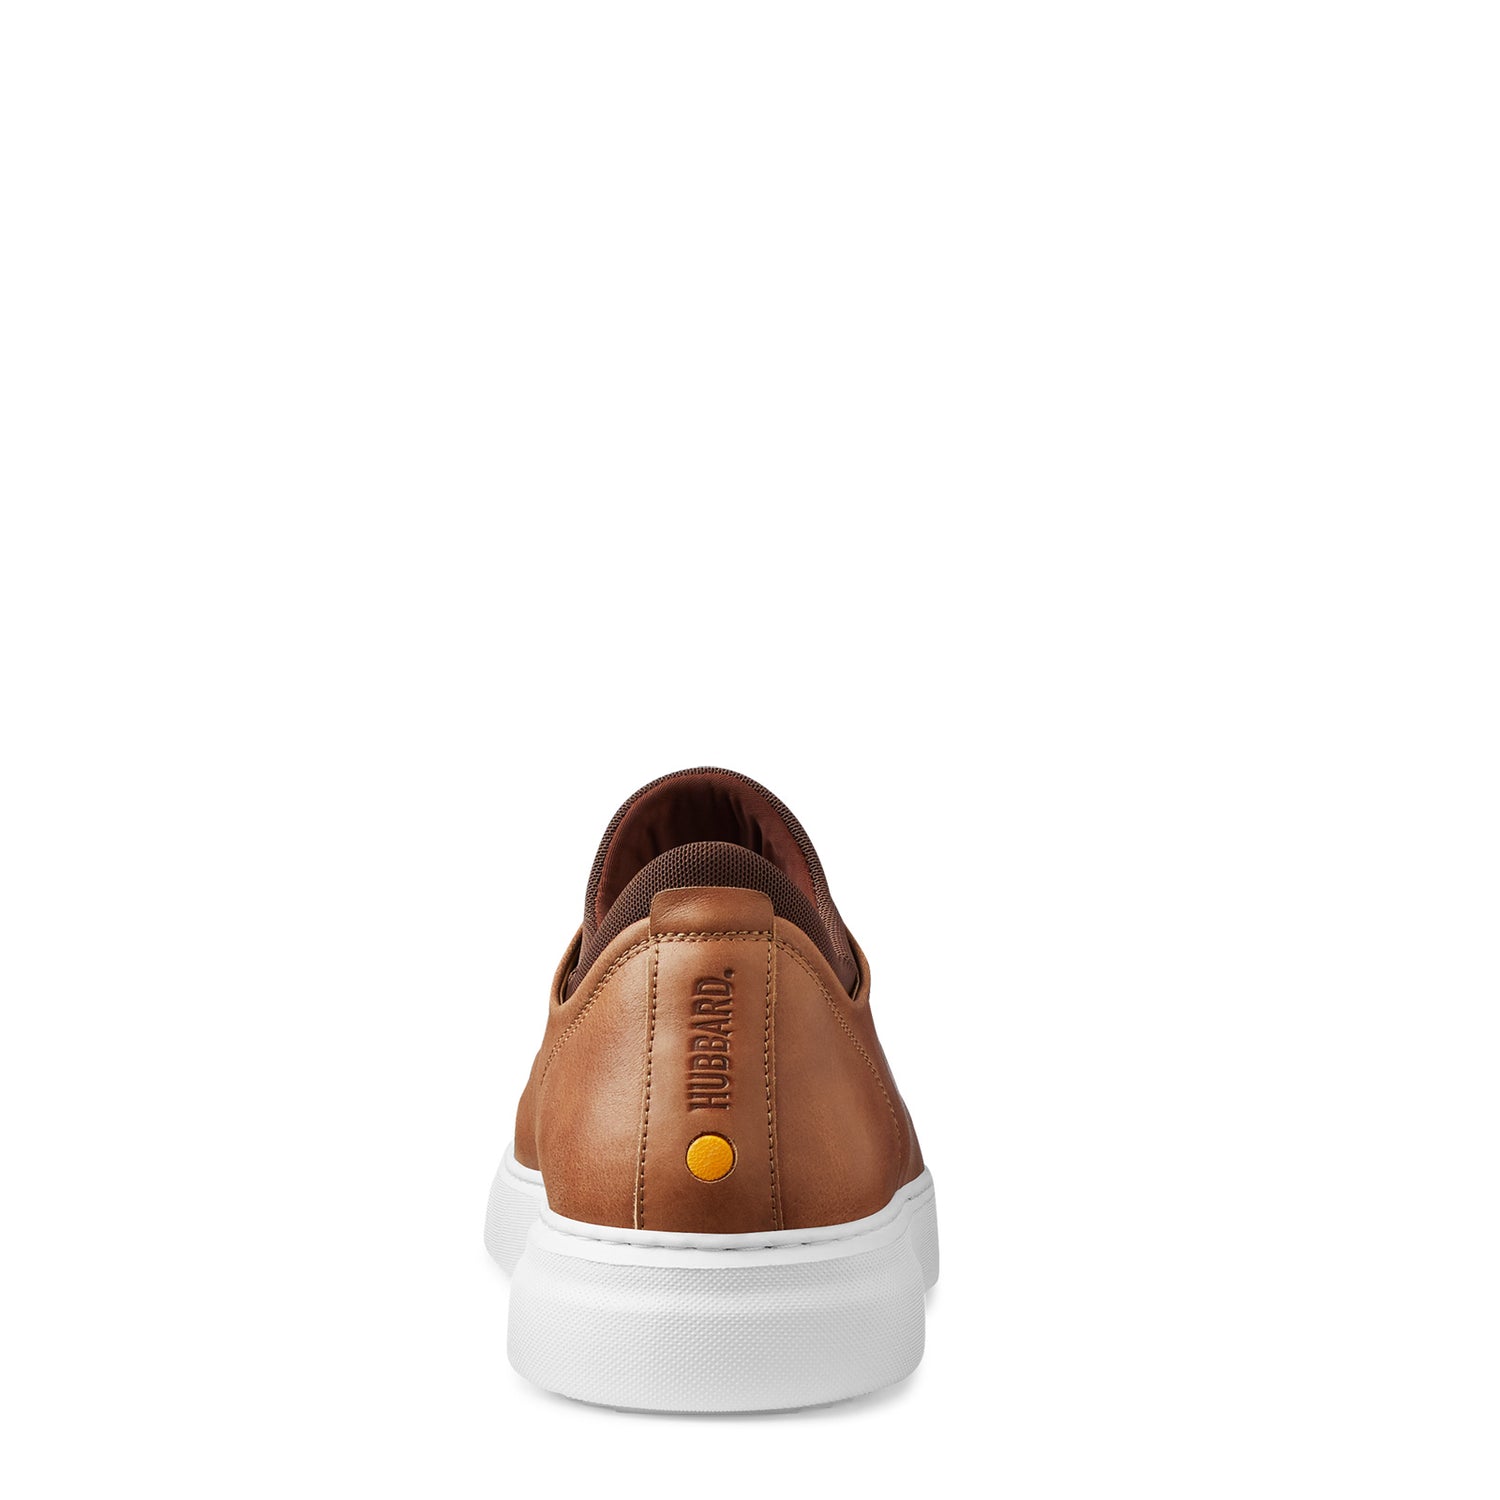 Peltz Shoes  Men's Samuel Hubbard Hubbard Free Sneaker Tan / White M1600-002